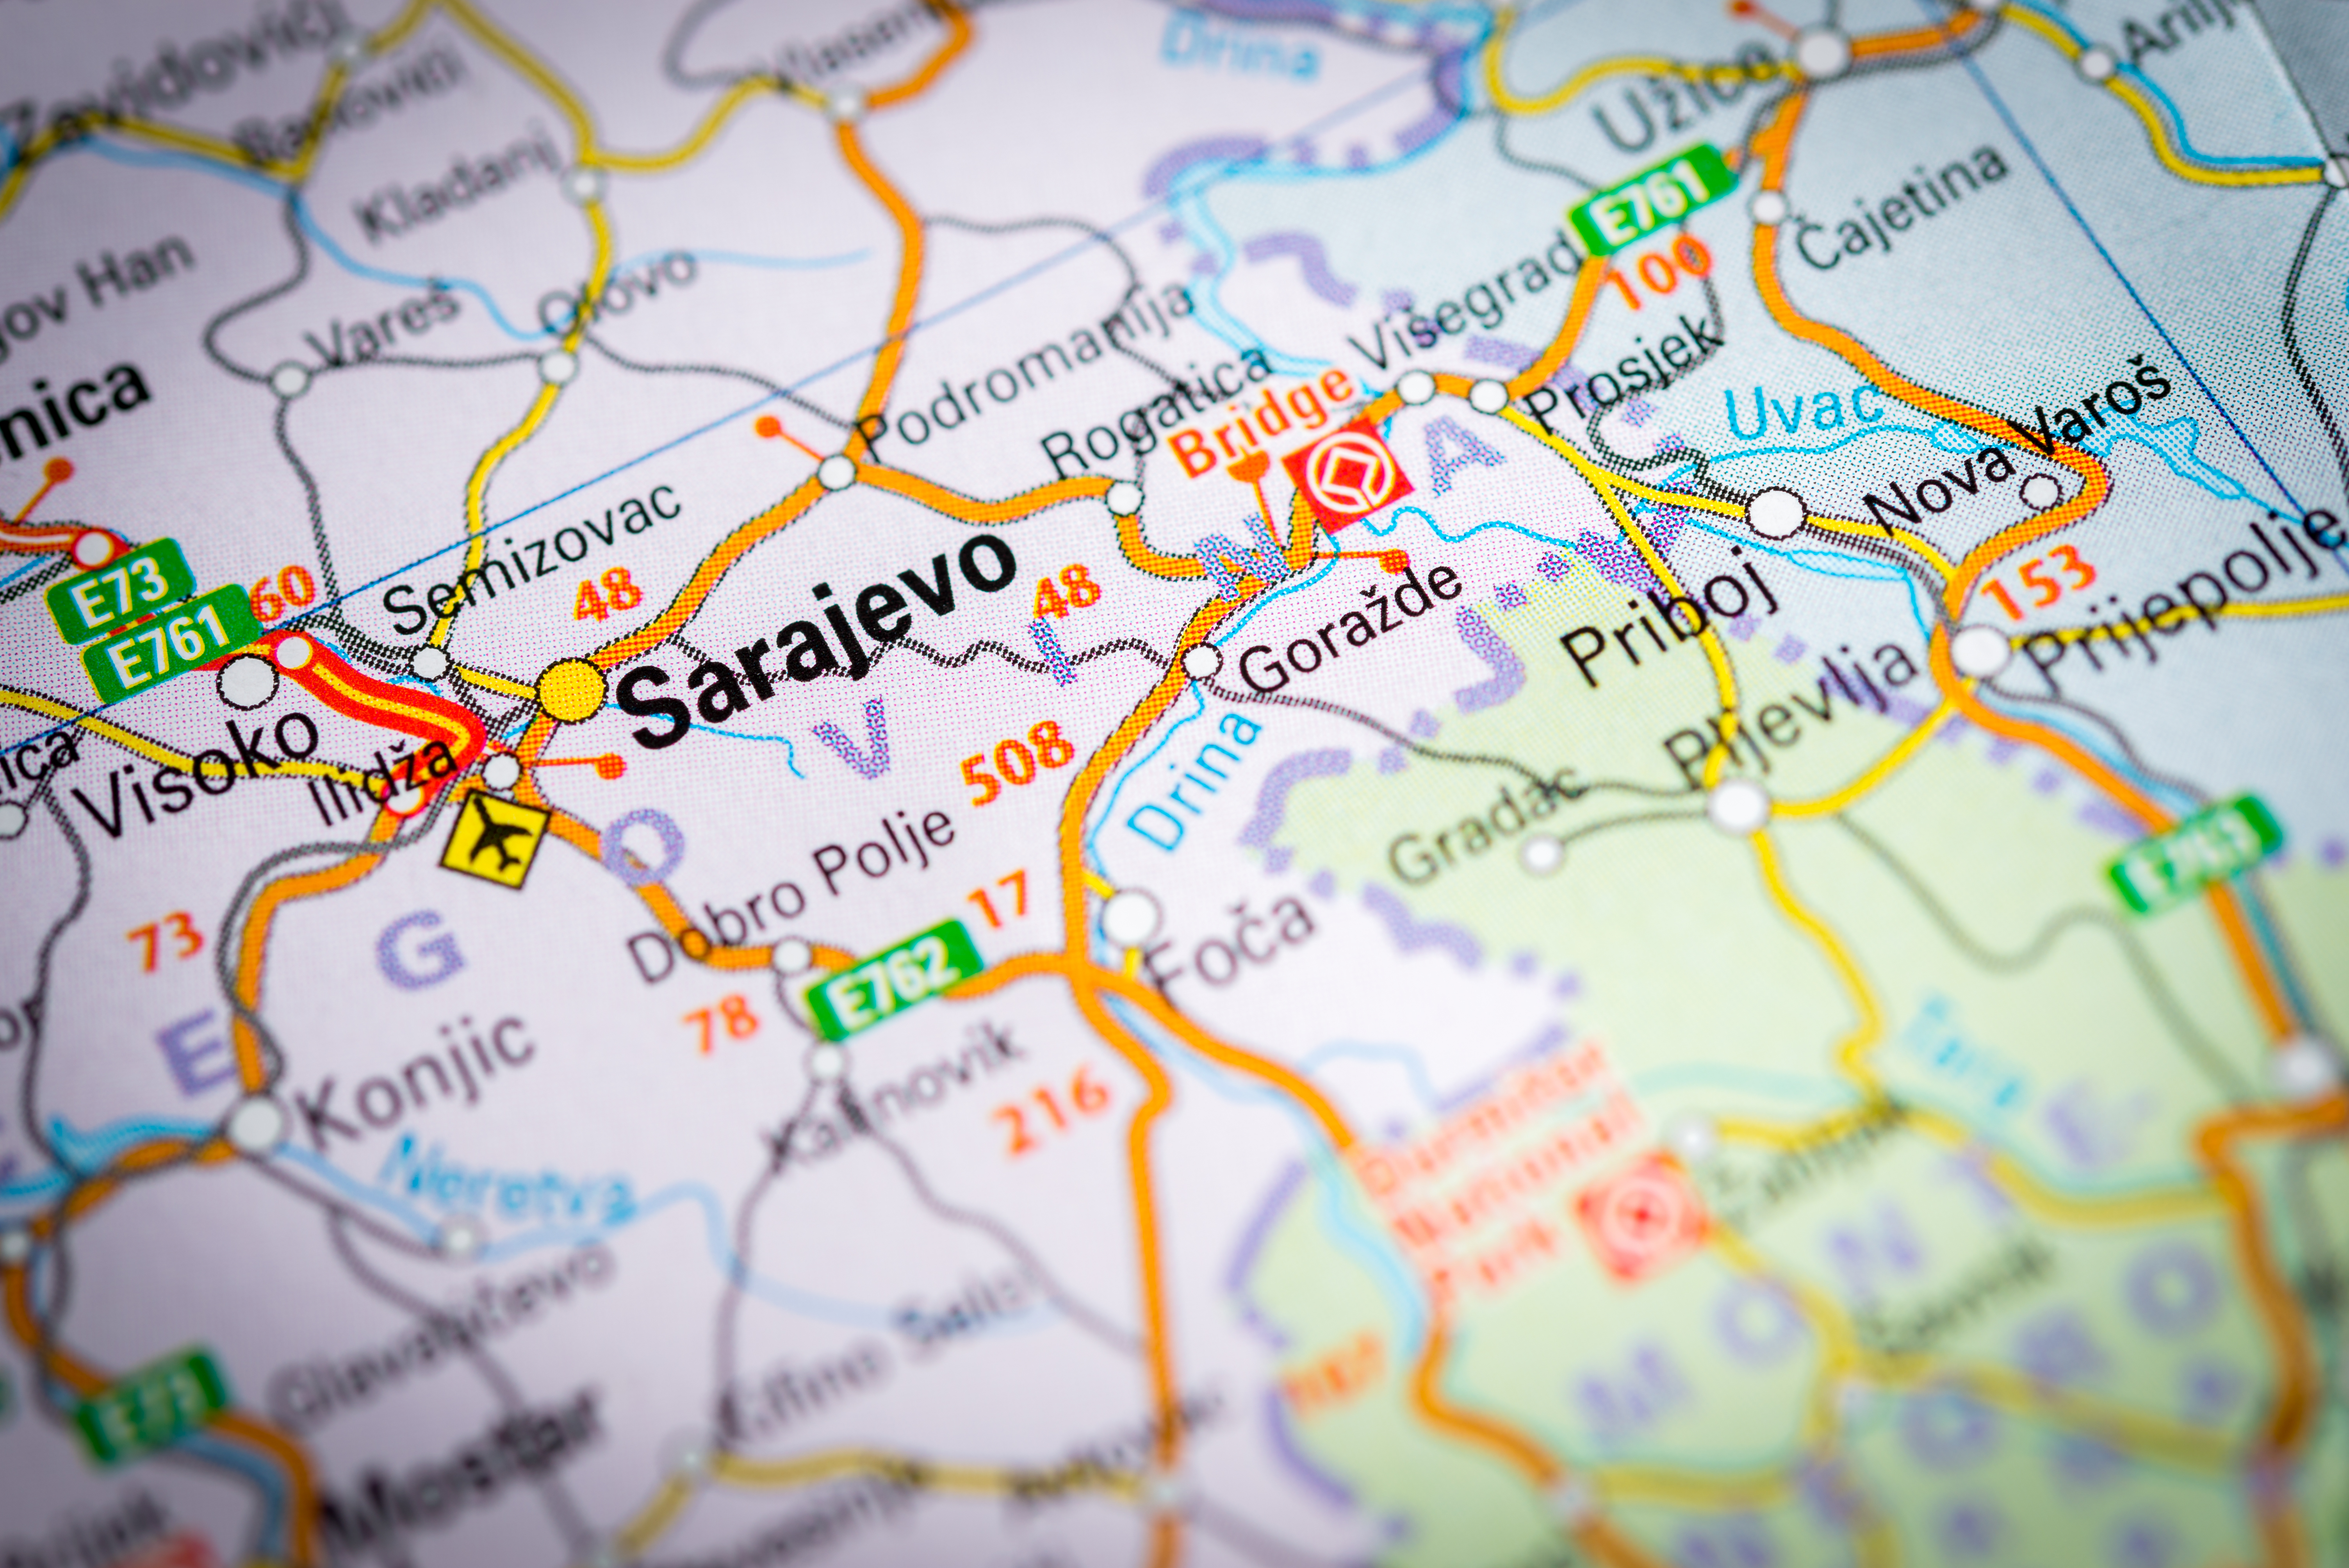 ParkVia Expands into Bosnia with Sarajevo Partnership Amidst Zagreb Rumors